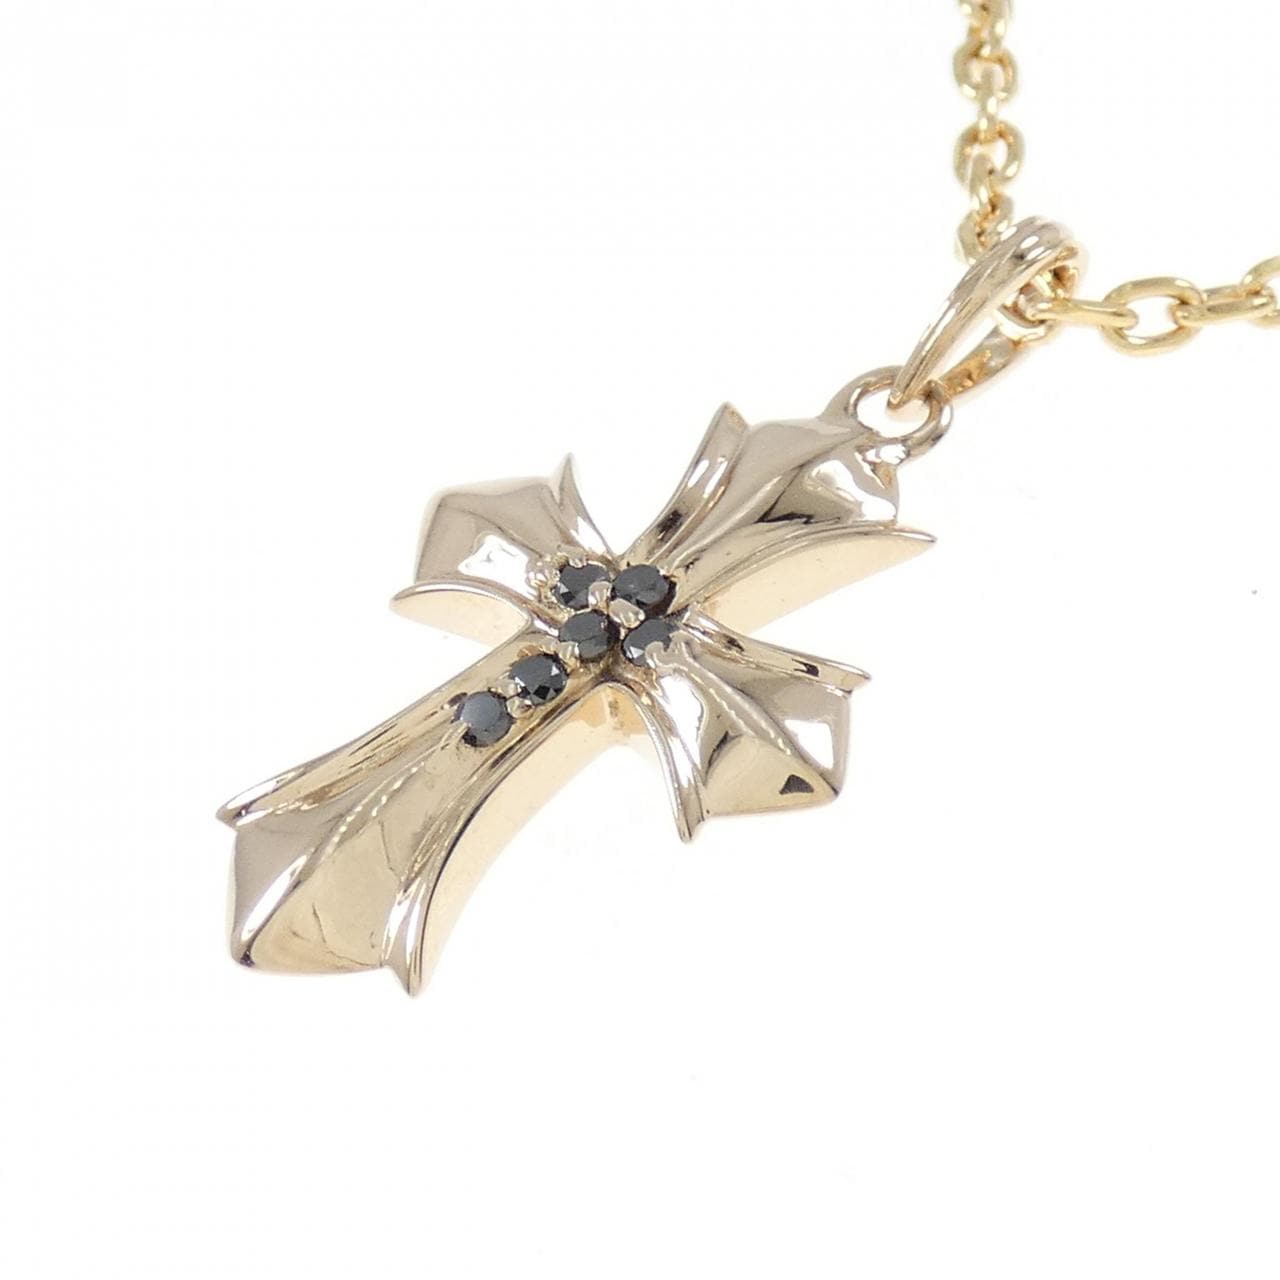 K18PG cross Diamond necklace 0.202CT